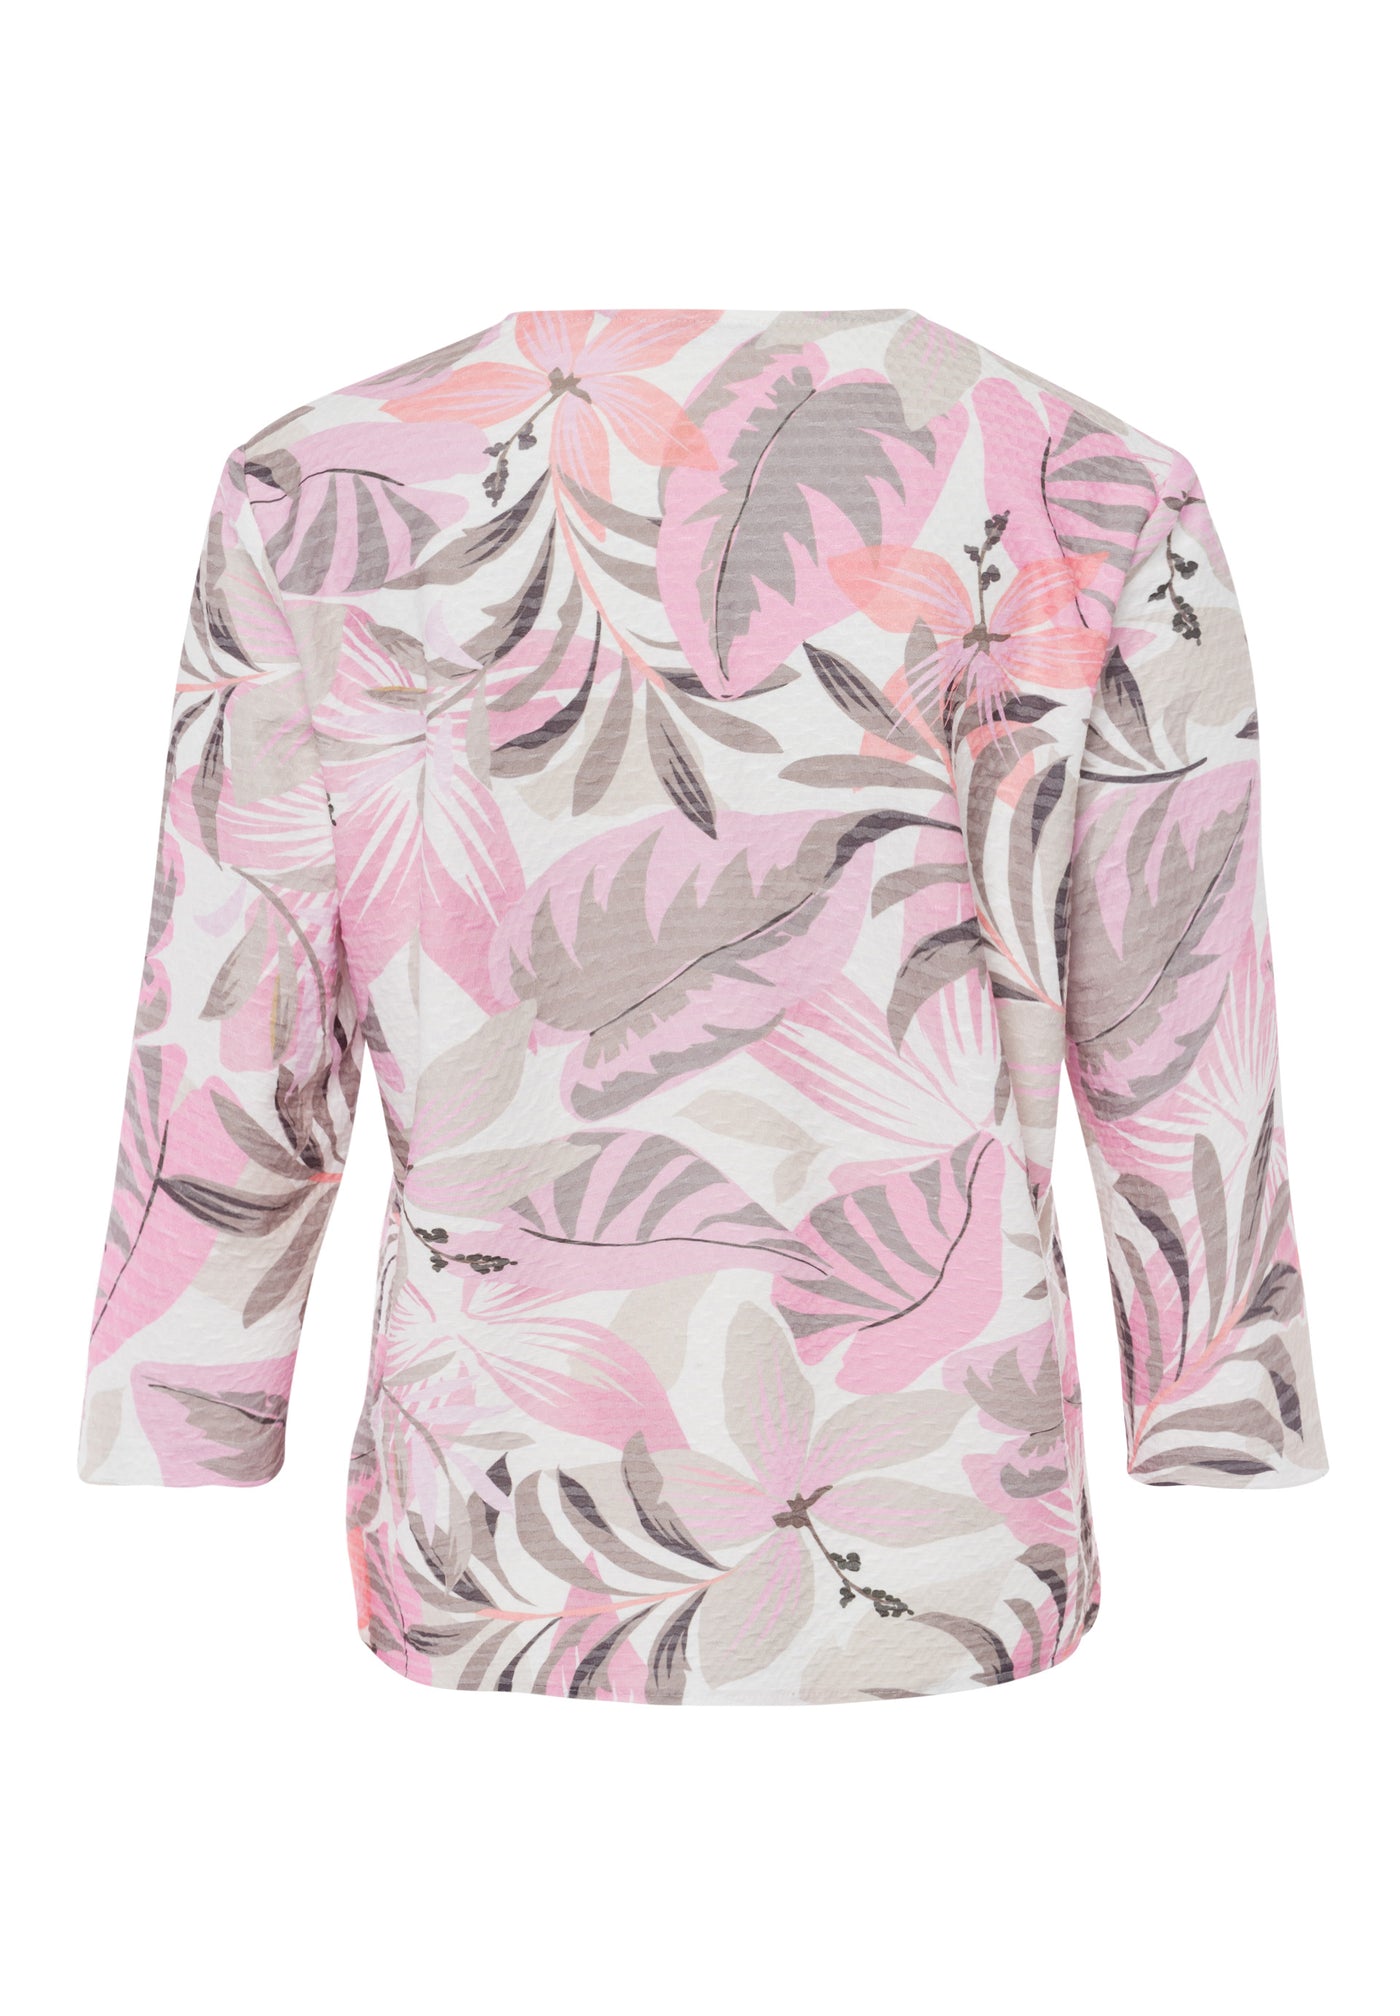 Cream Zip Up Jacket with Pastel Floral Print & Pocket Detail